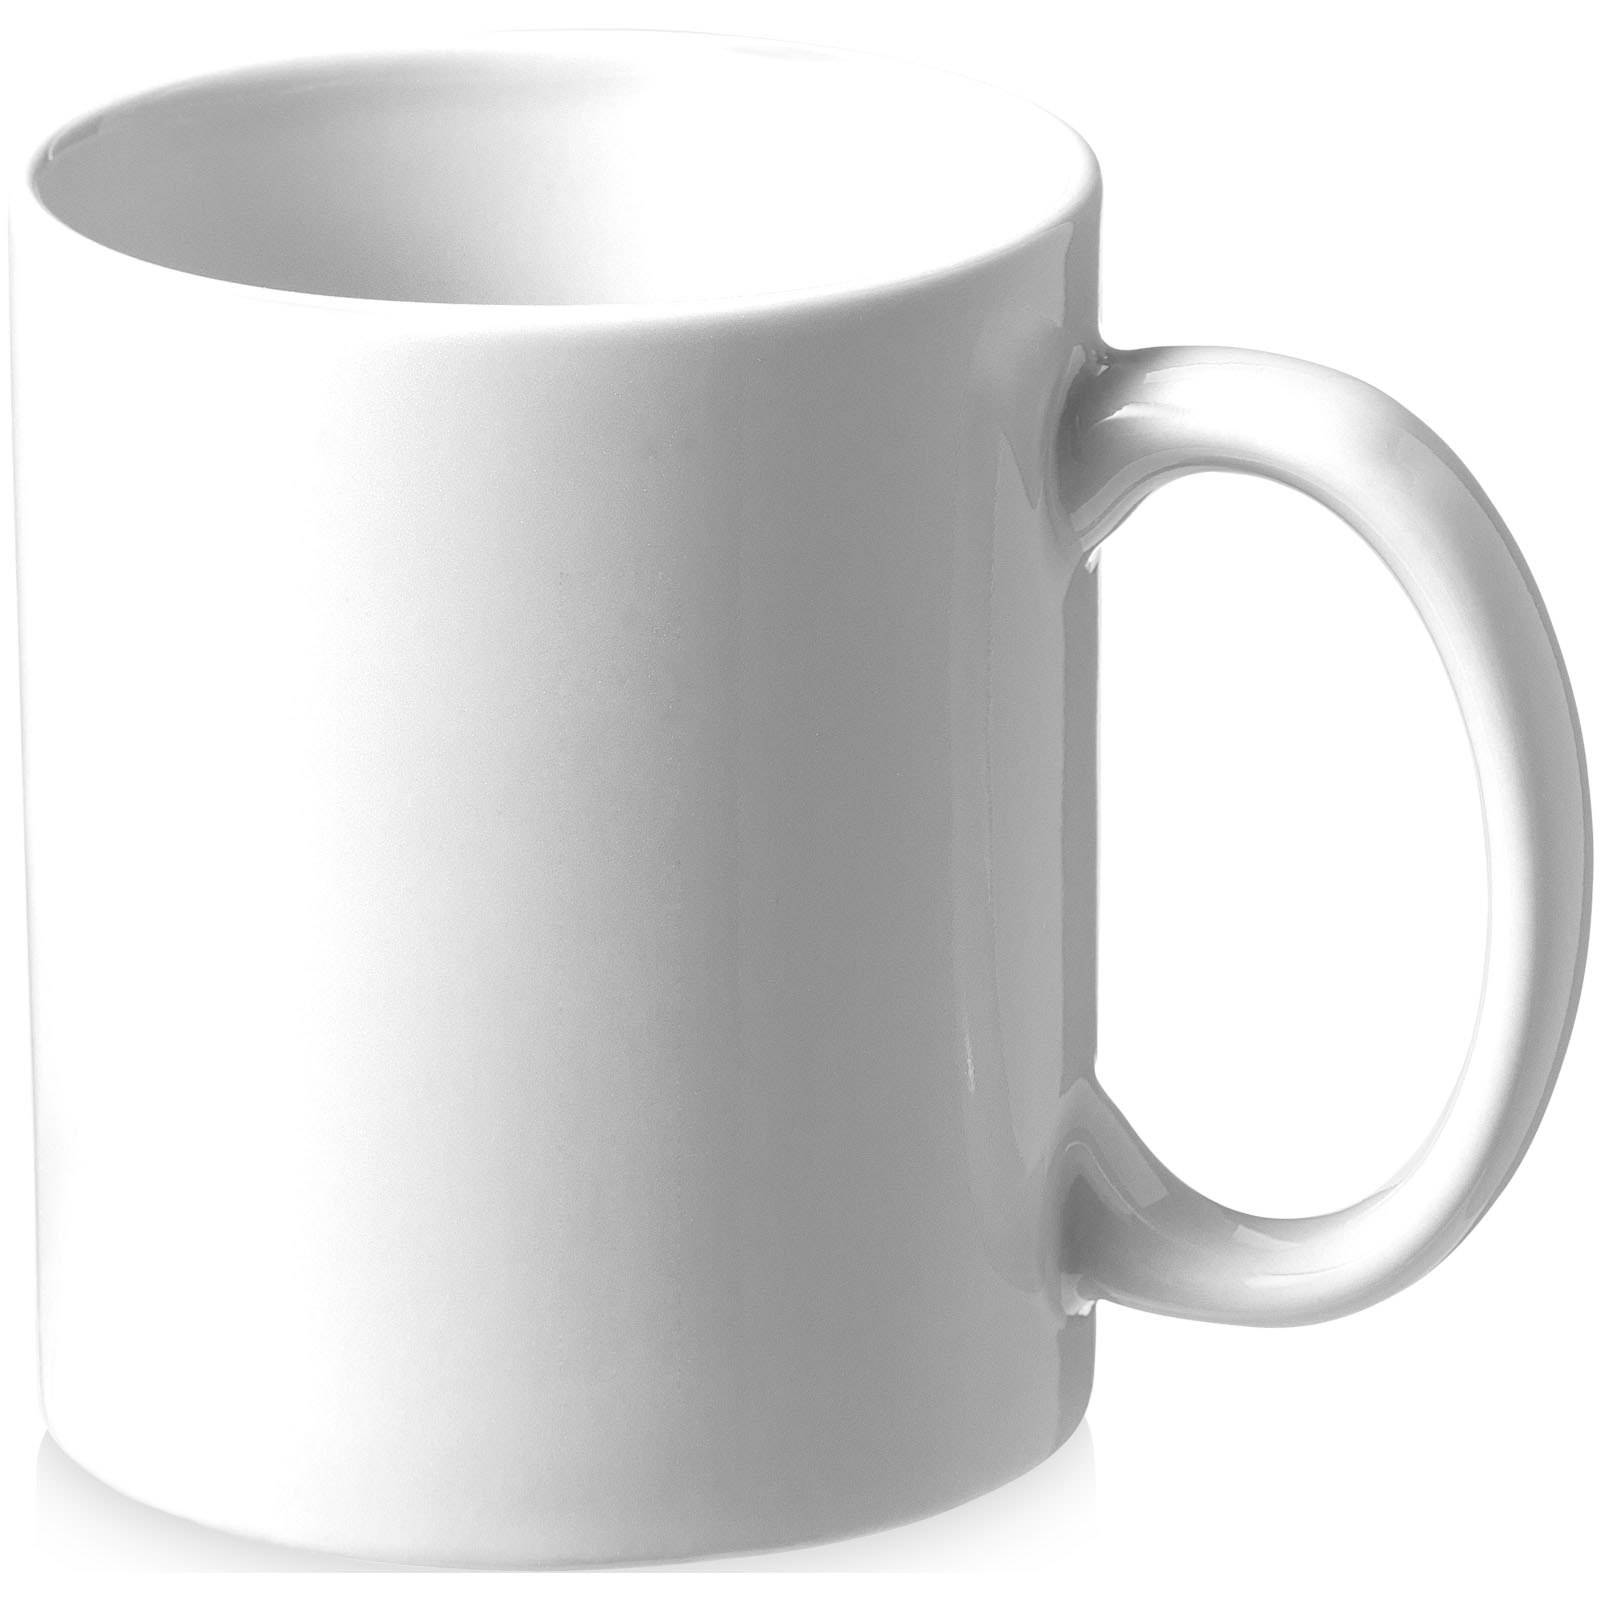 Standard mugs - Bahia 330 ml ceramic mug